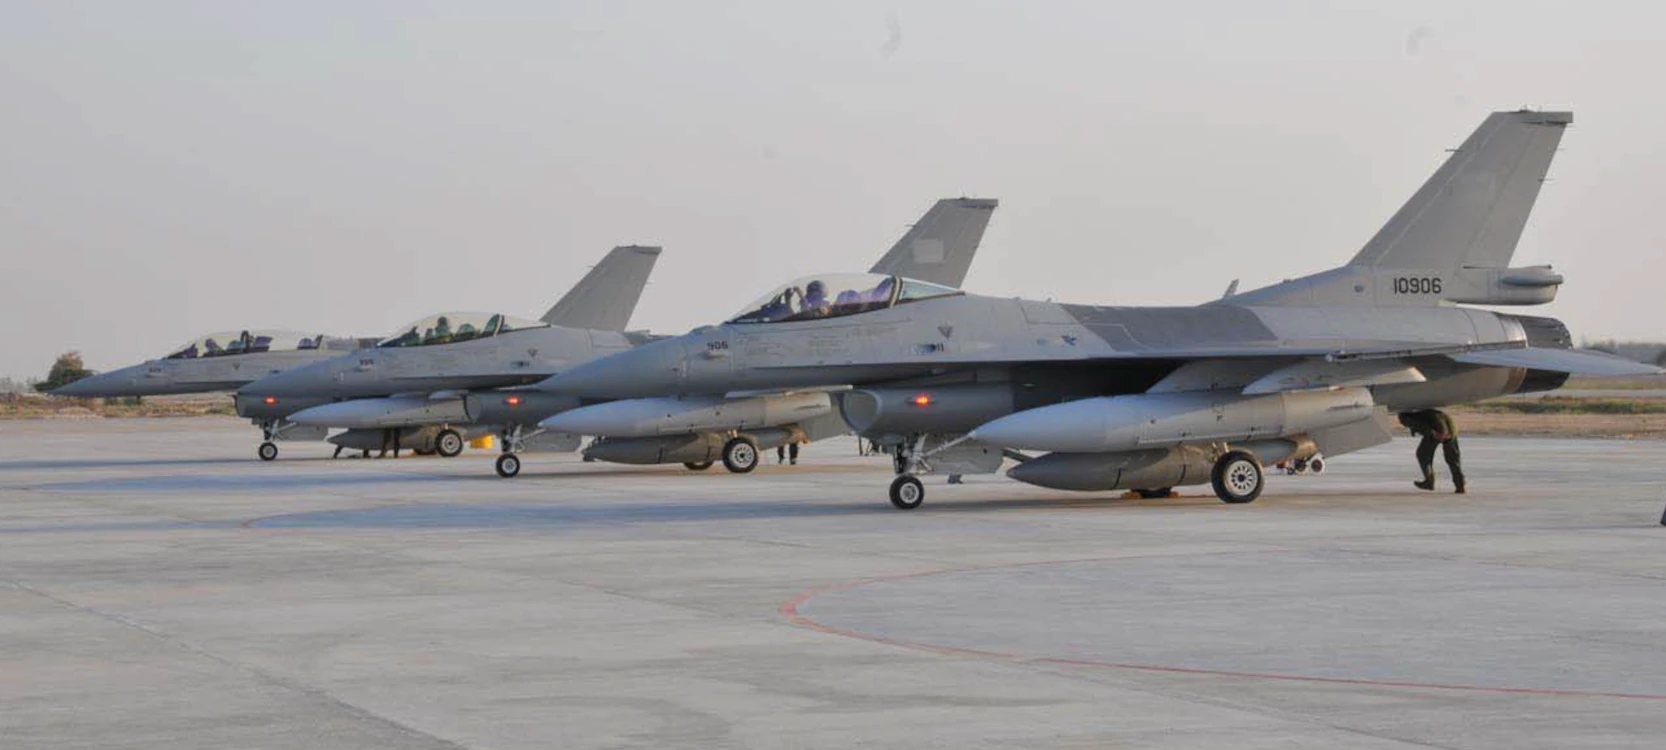 Pakistan Air Force F-16 C/D BLOCK 52